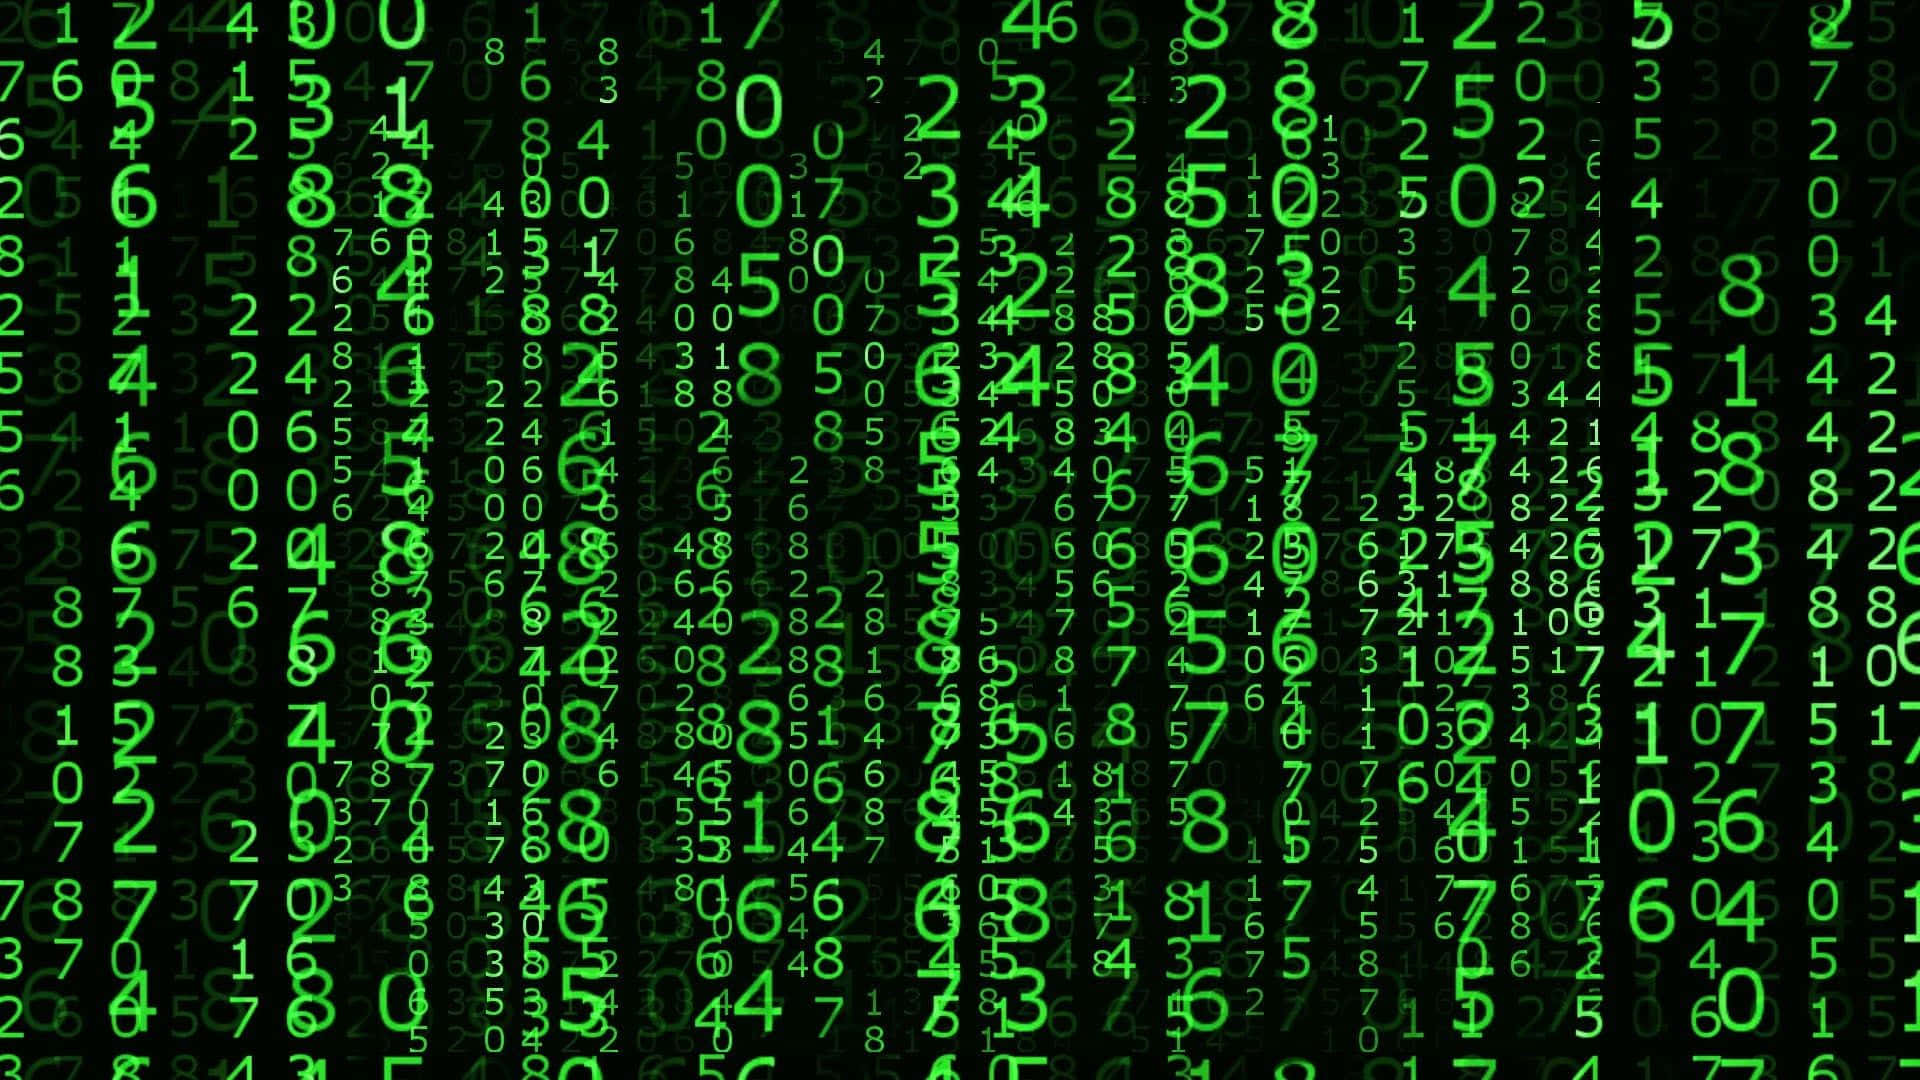 Logos and symbols within the Matrix